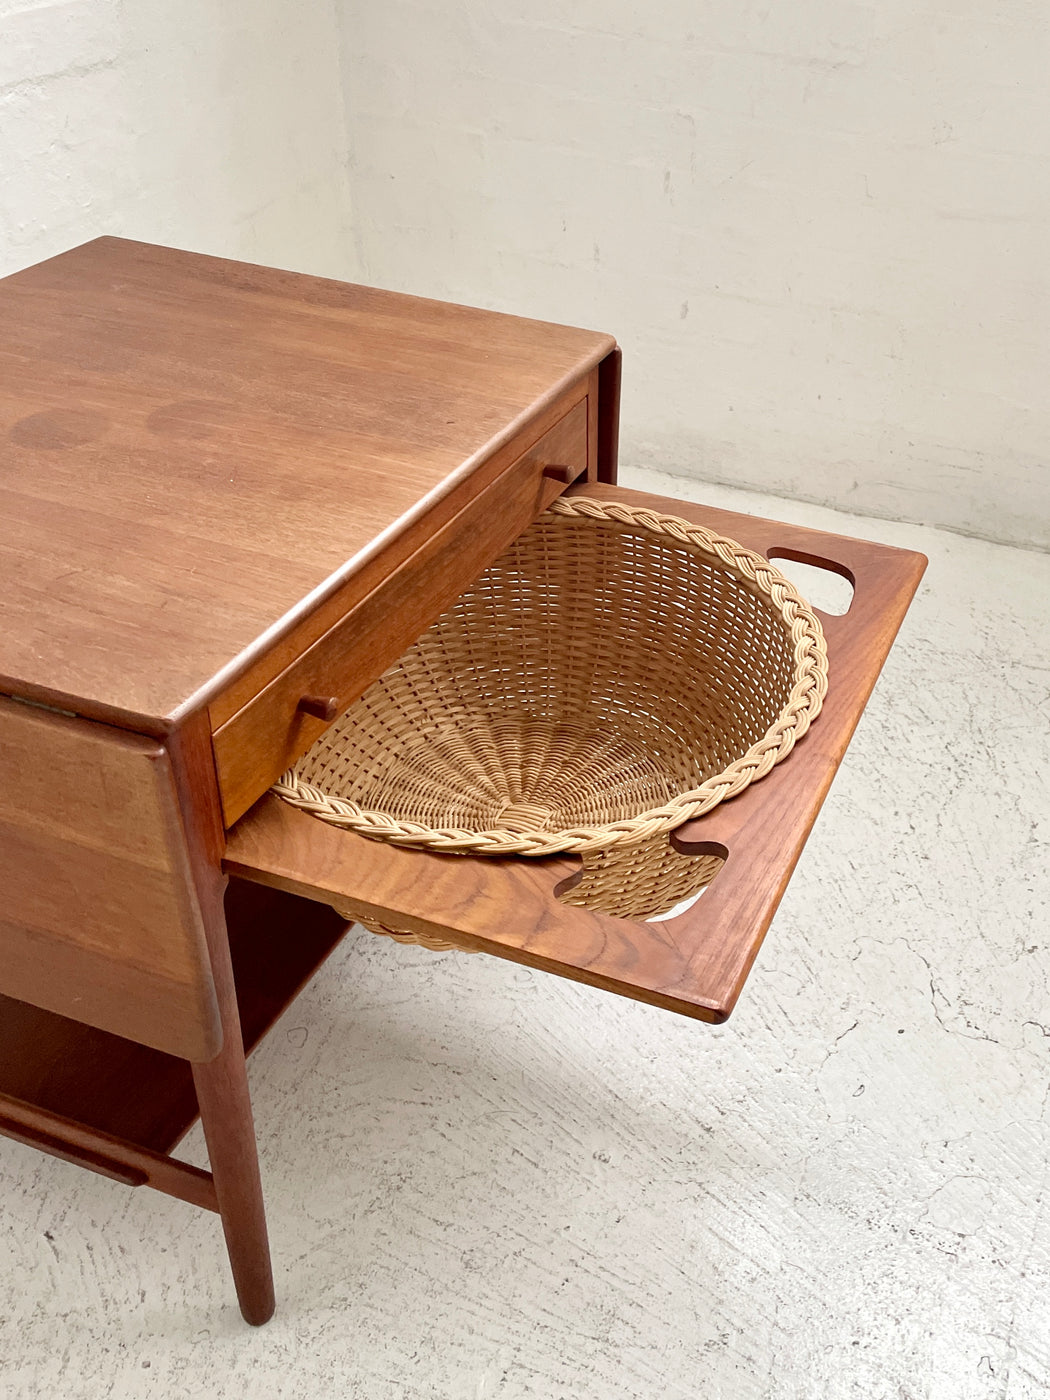 Hans J Wegner 'AT33' Teak Sewing Table